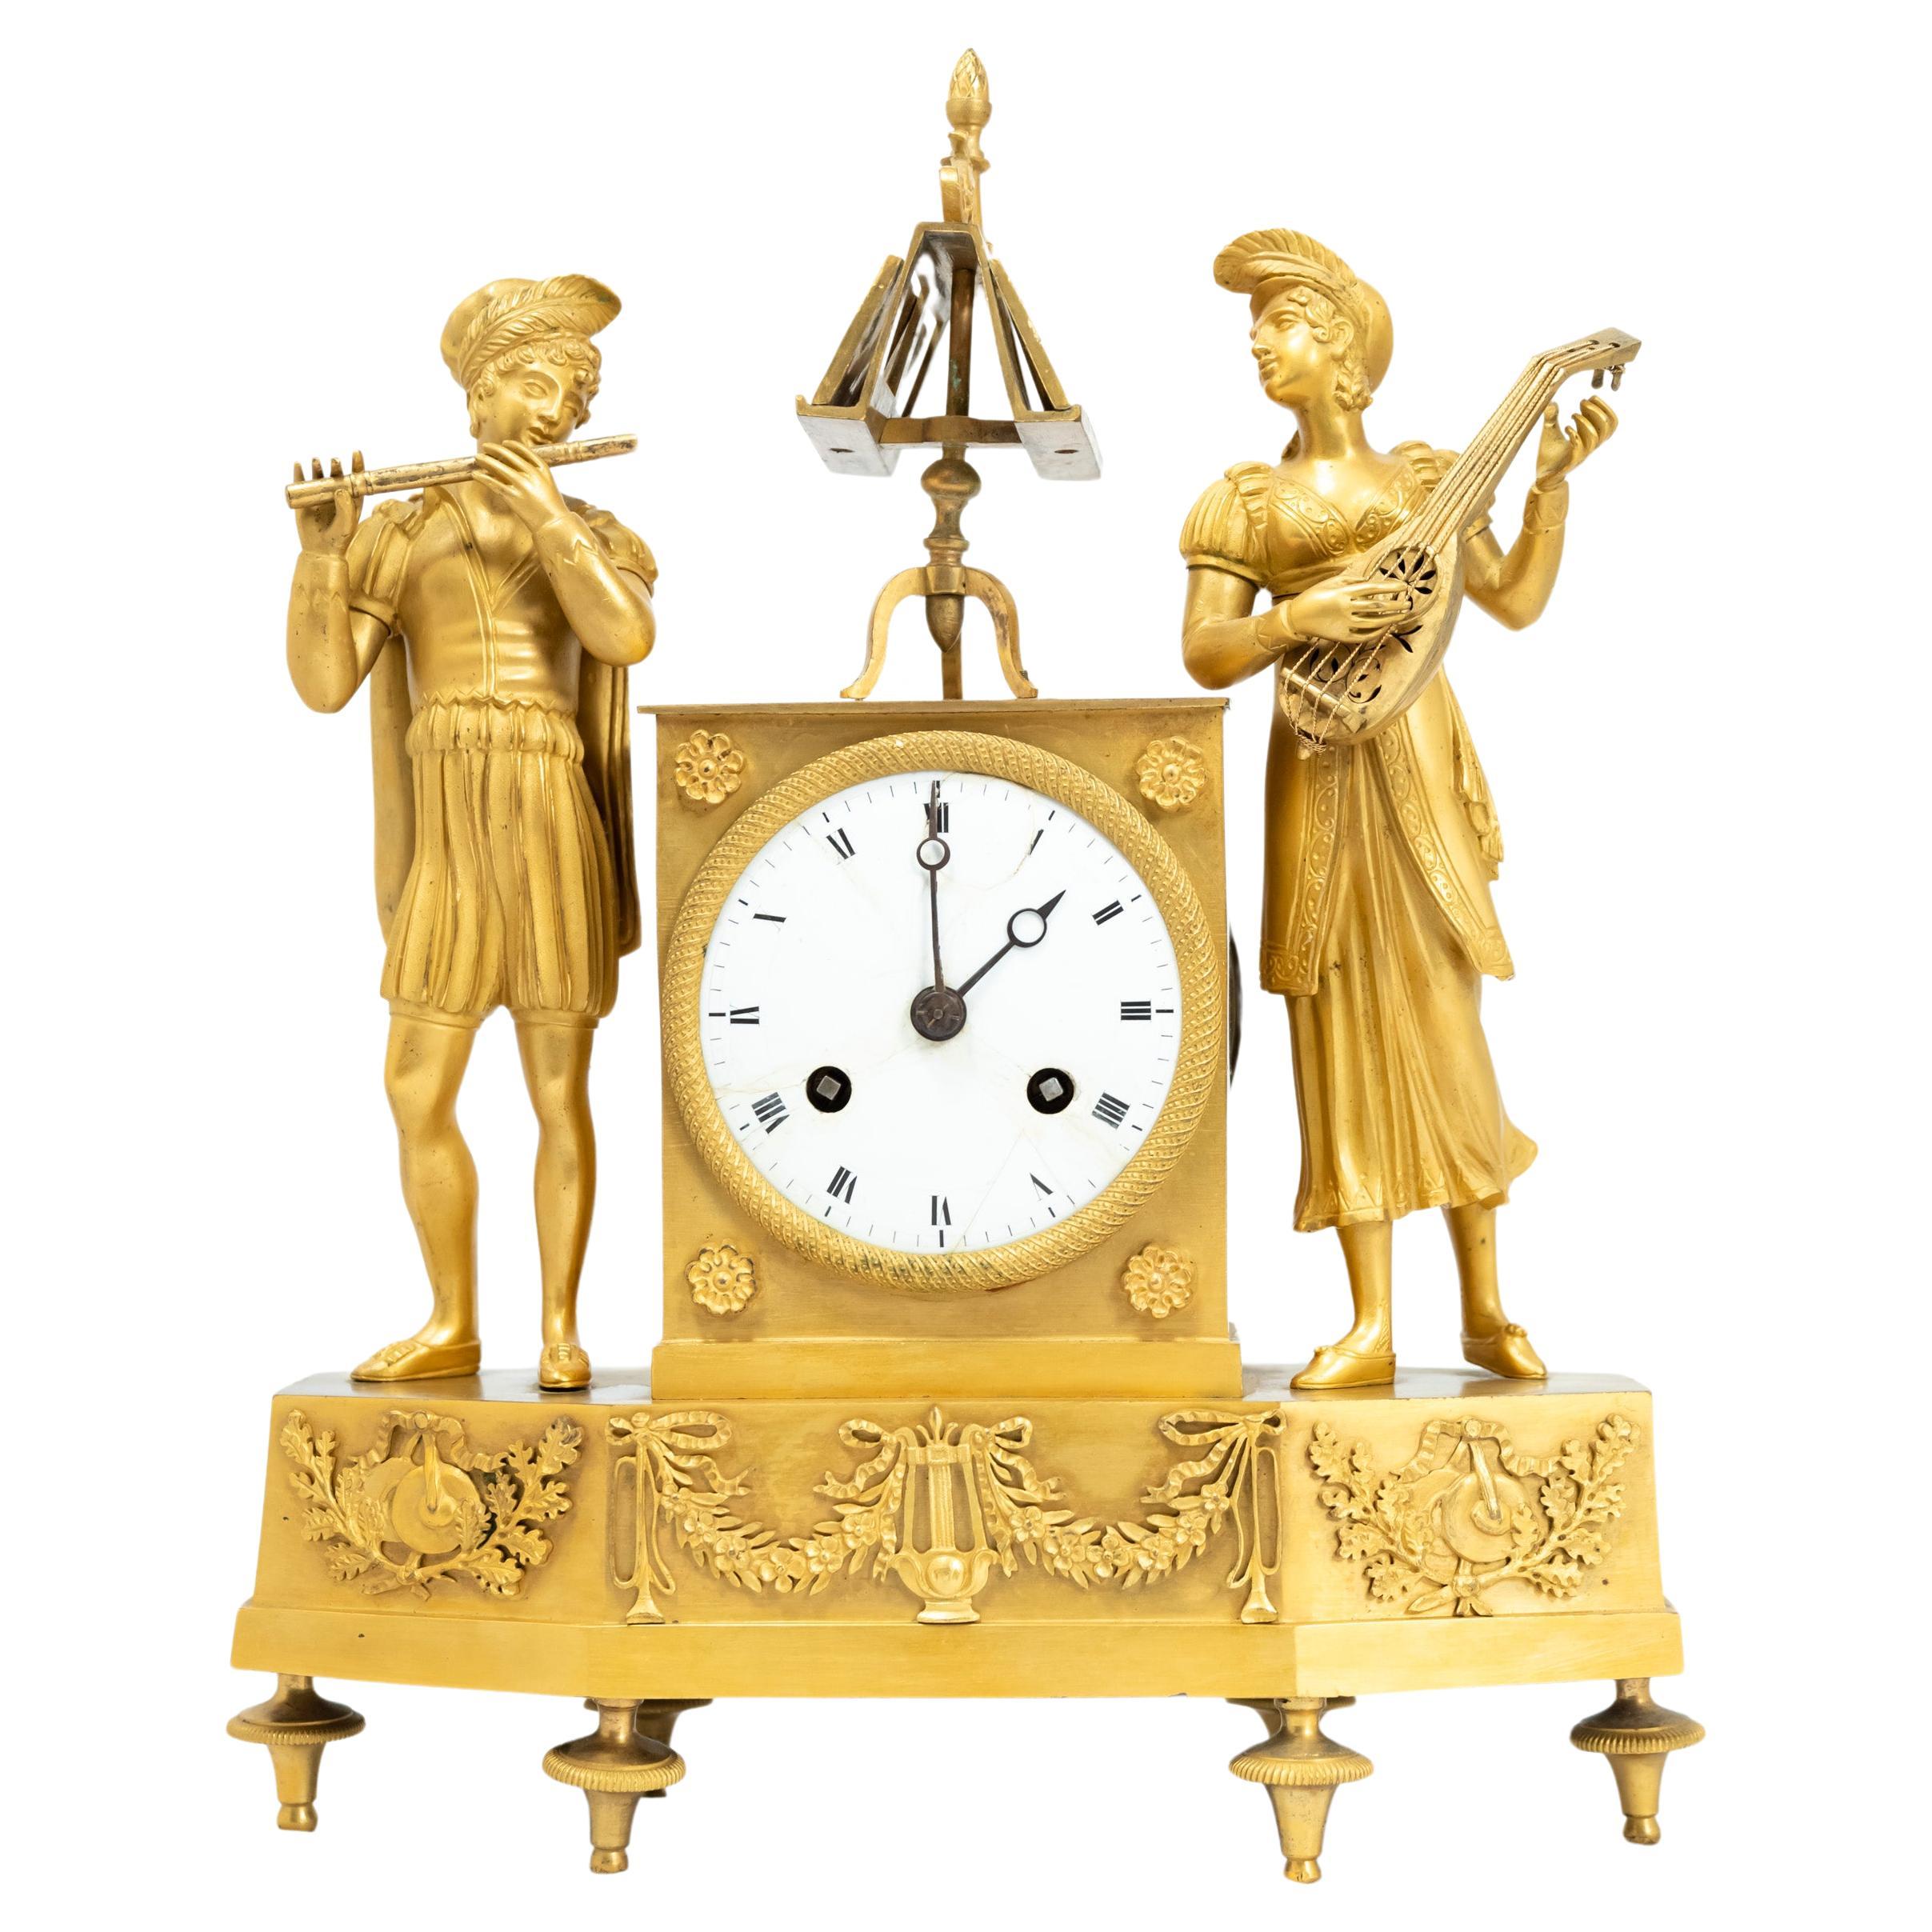 French Fire-Gilt Bronze Clock Depicting Troubadour Figures c. 1820 For Sale